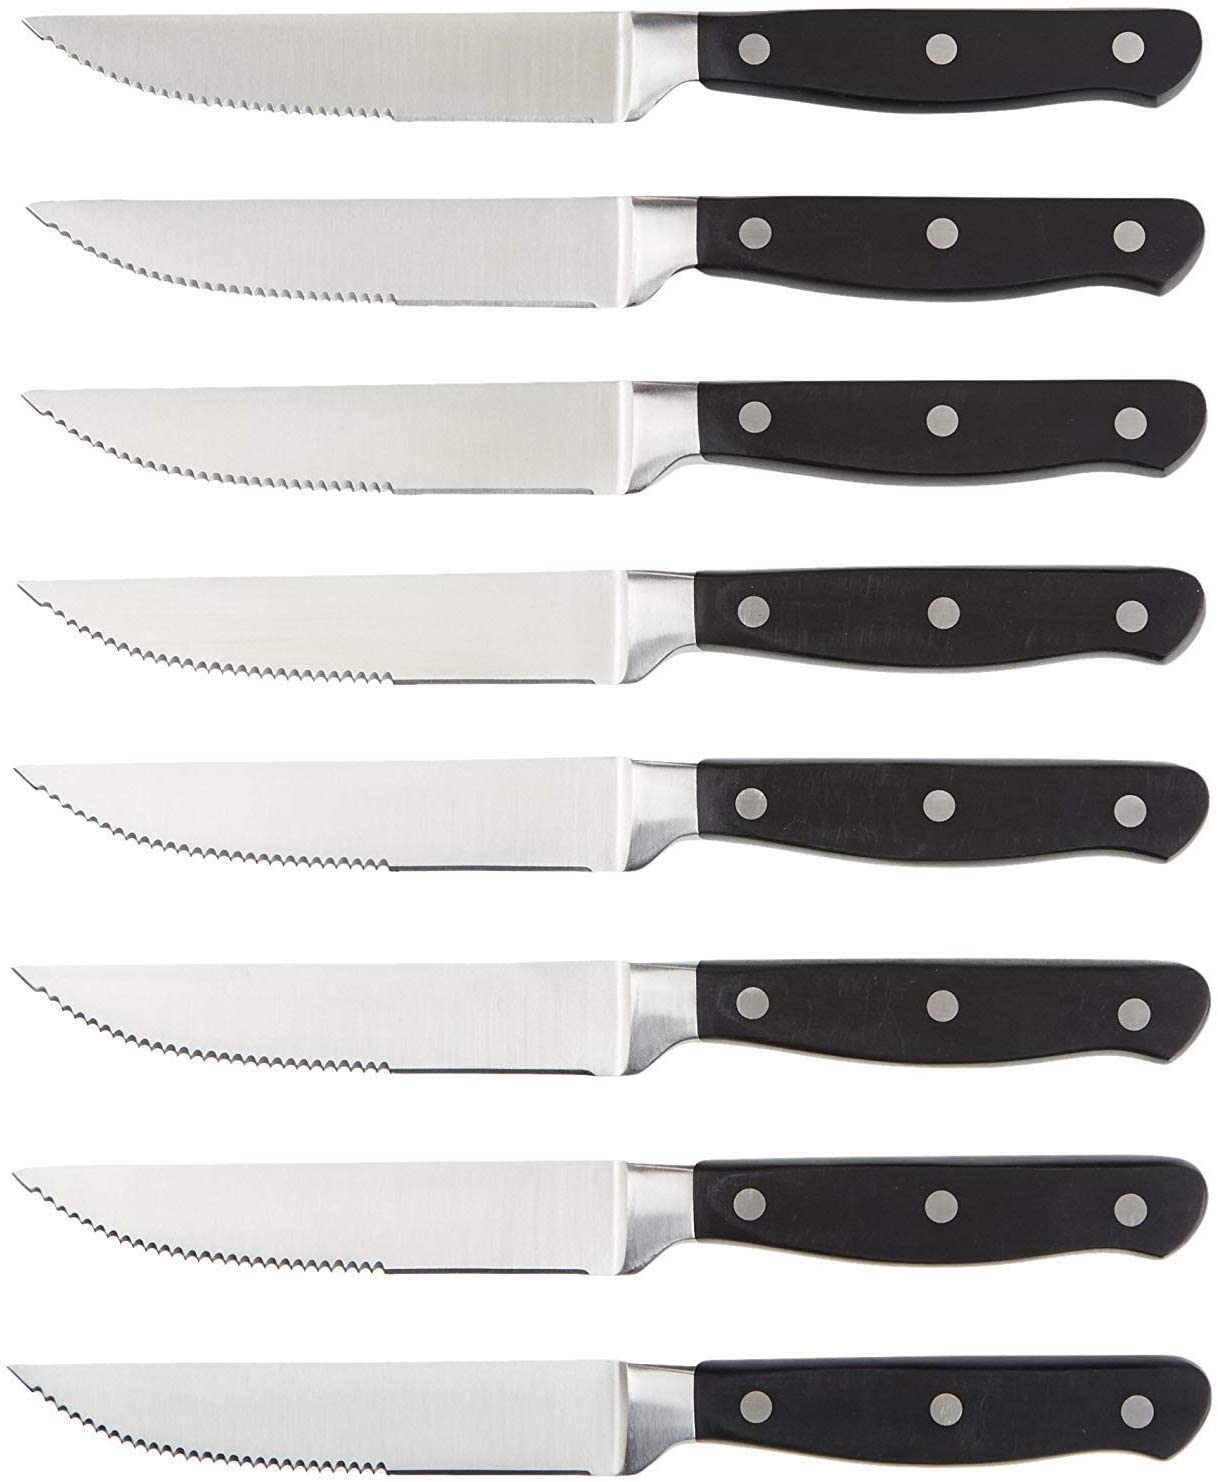 https://www.wideopencountry.com/wp-content/uploads/sites/4/eats/2021/03/Amazon-Basics-Premium-8-Piece-Kitchen-Steak-Knife-Set-Black.jpg?resize=1218%2C1482